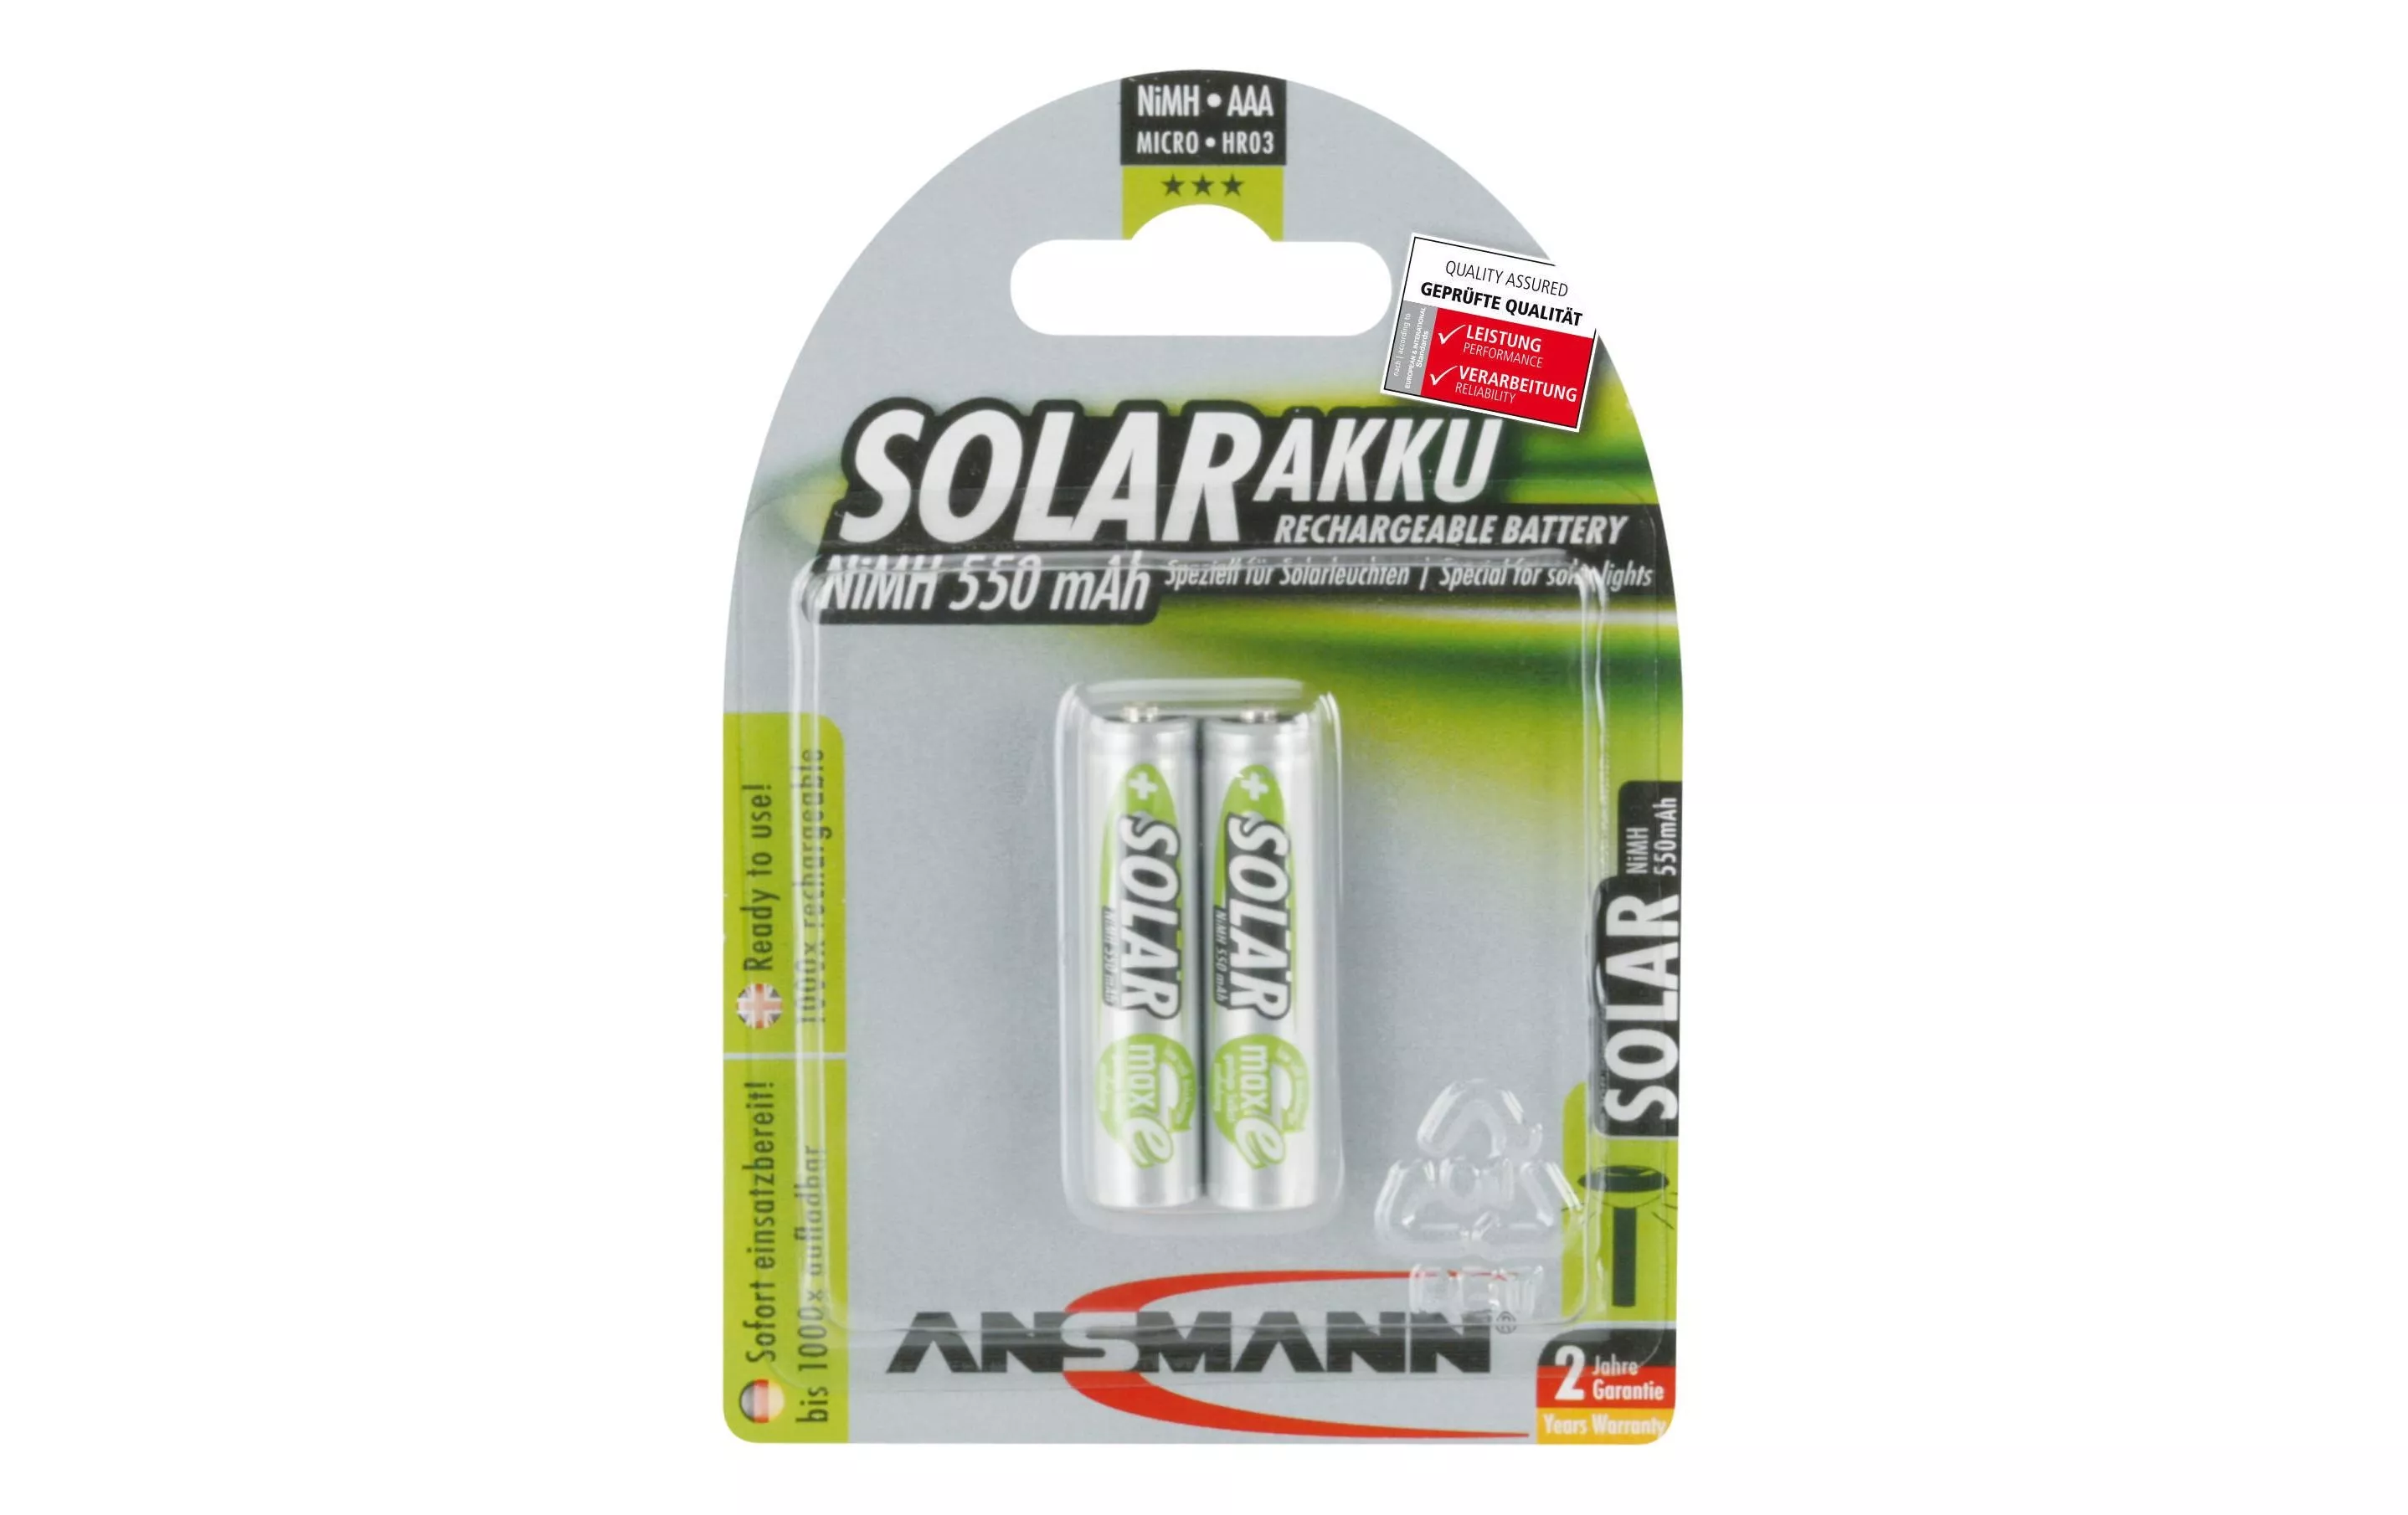 Akku 2x AAA 550 mAh für Solaranwendungen